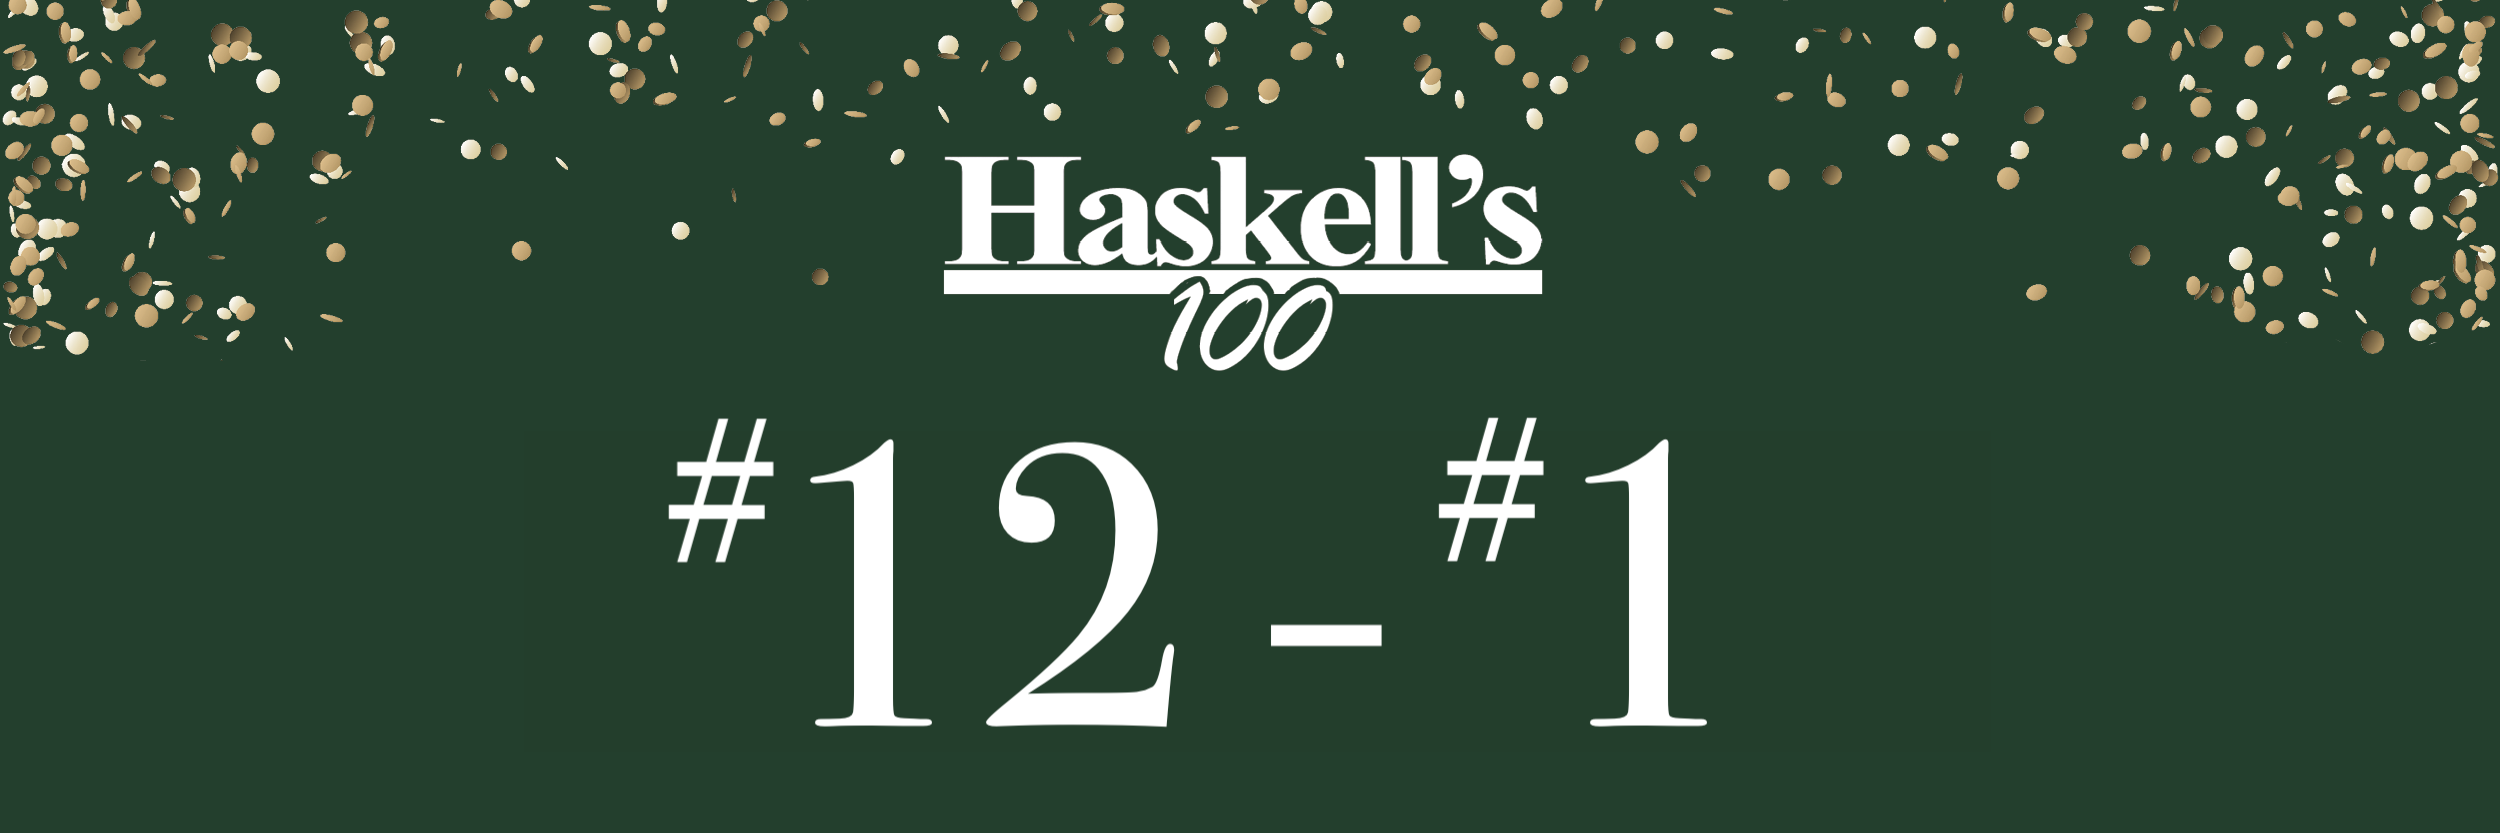 Haskells 100 LP banner_12-1_2021web